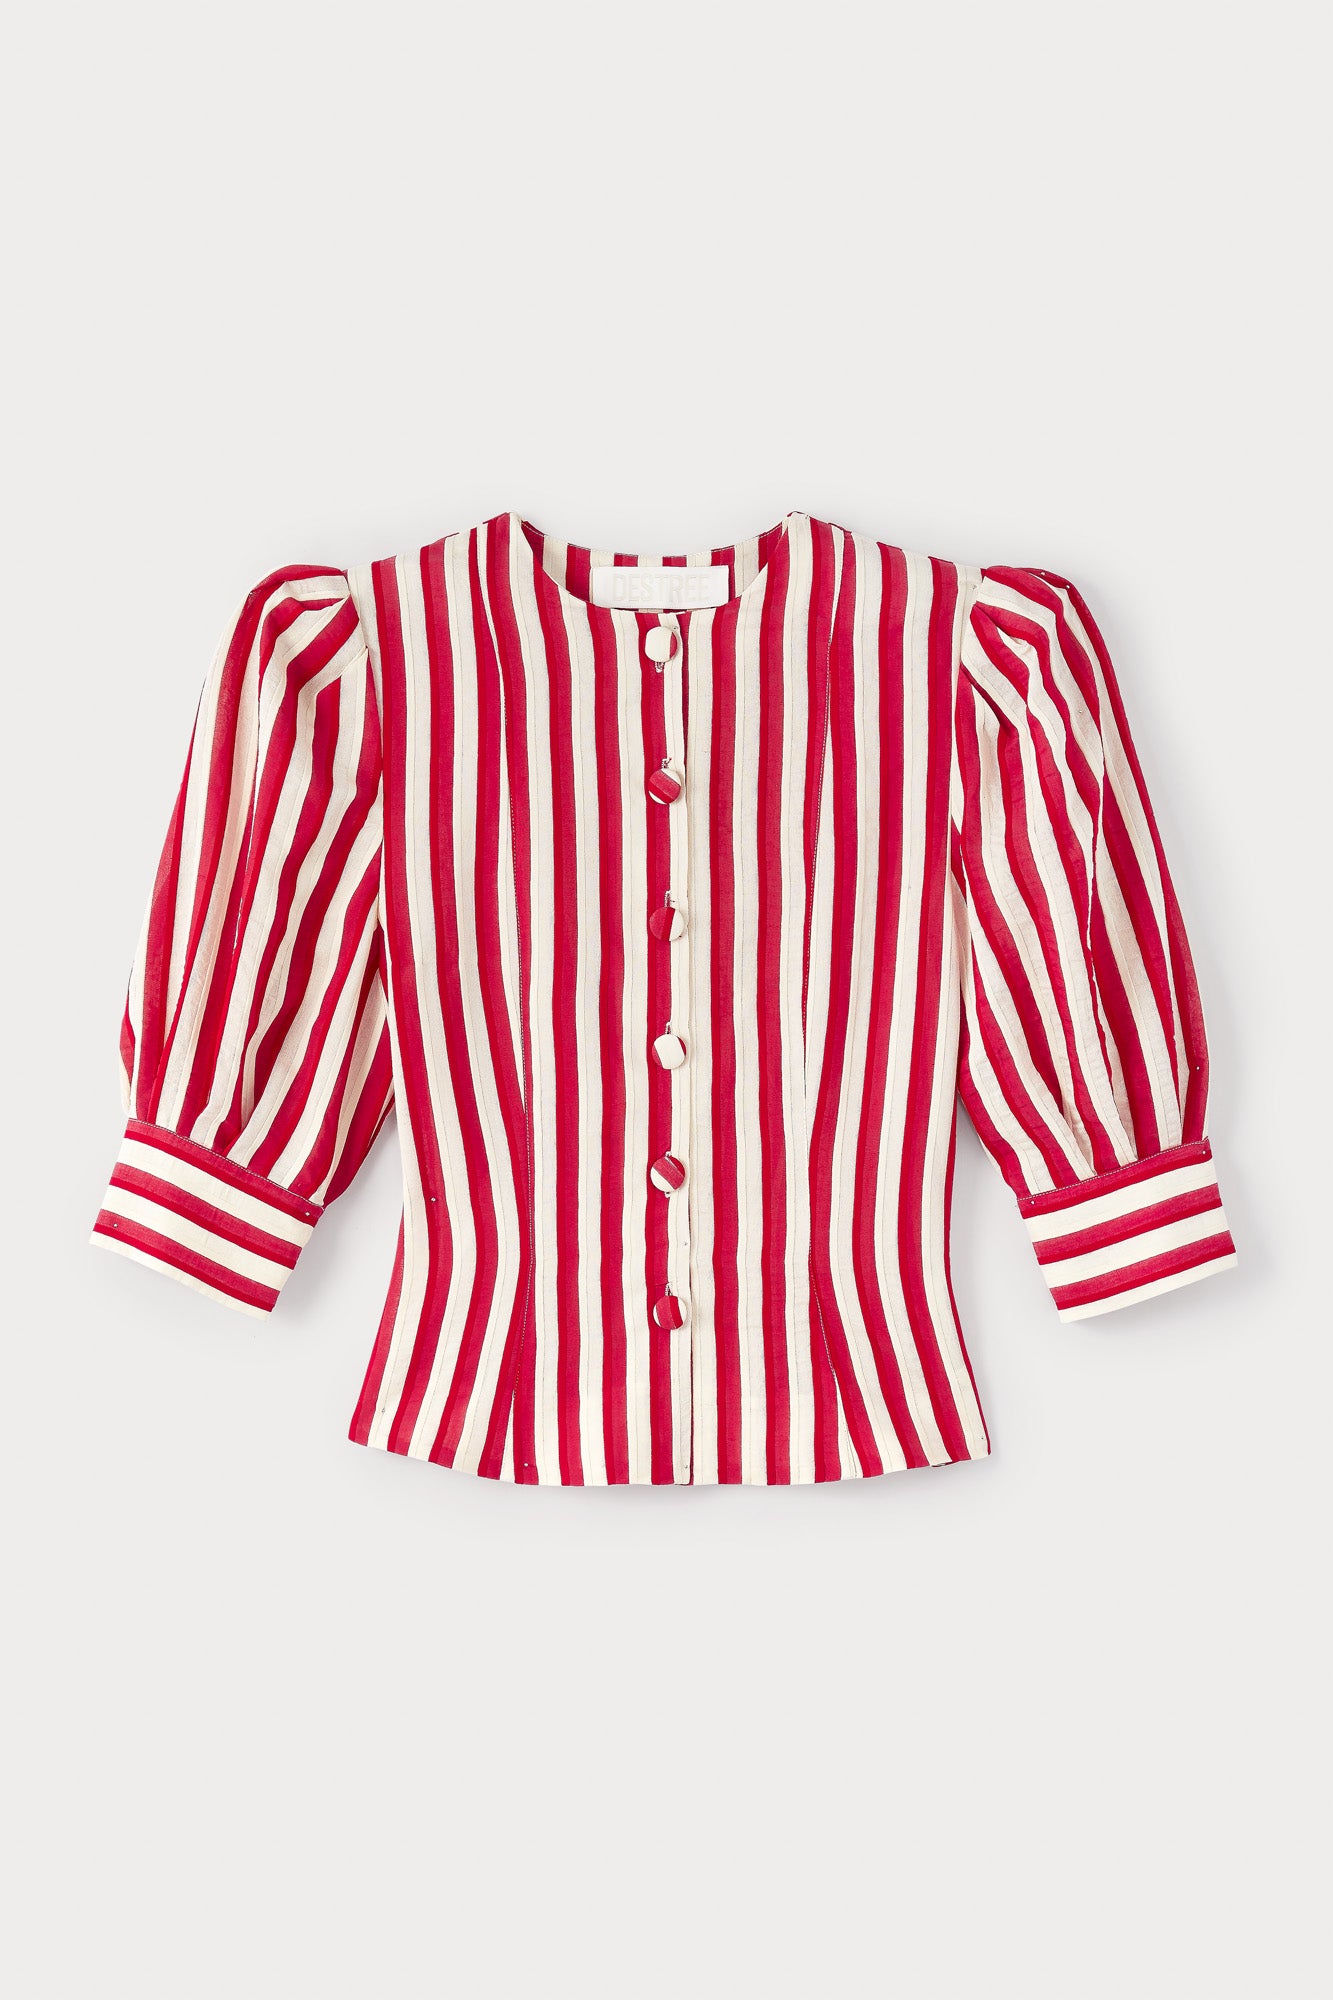 Destree-Jasper Stripes Shirt-Justbrazil